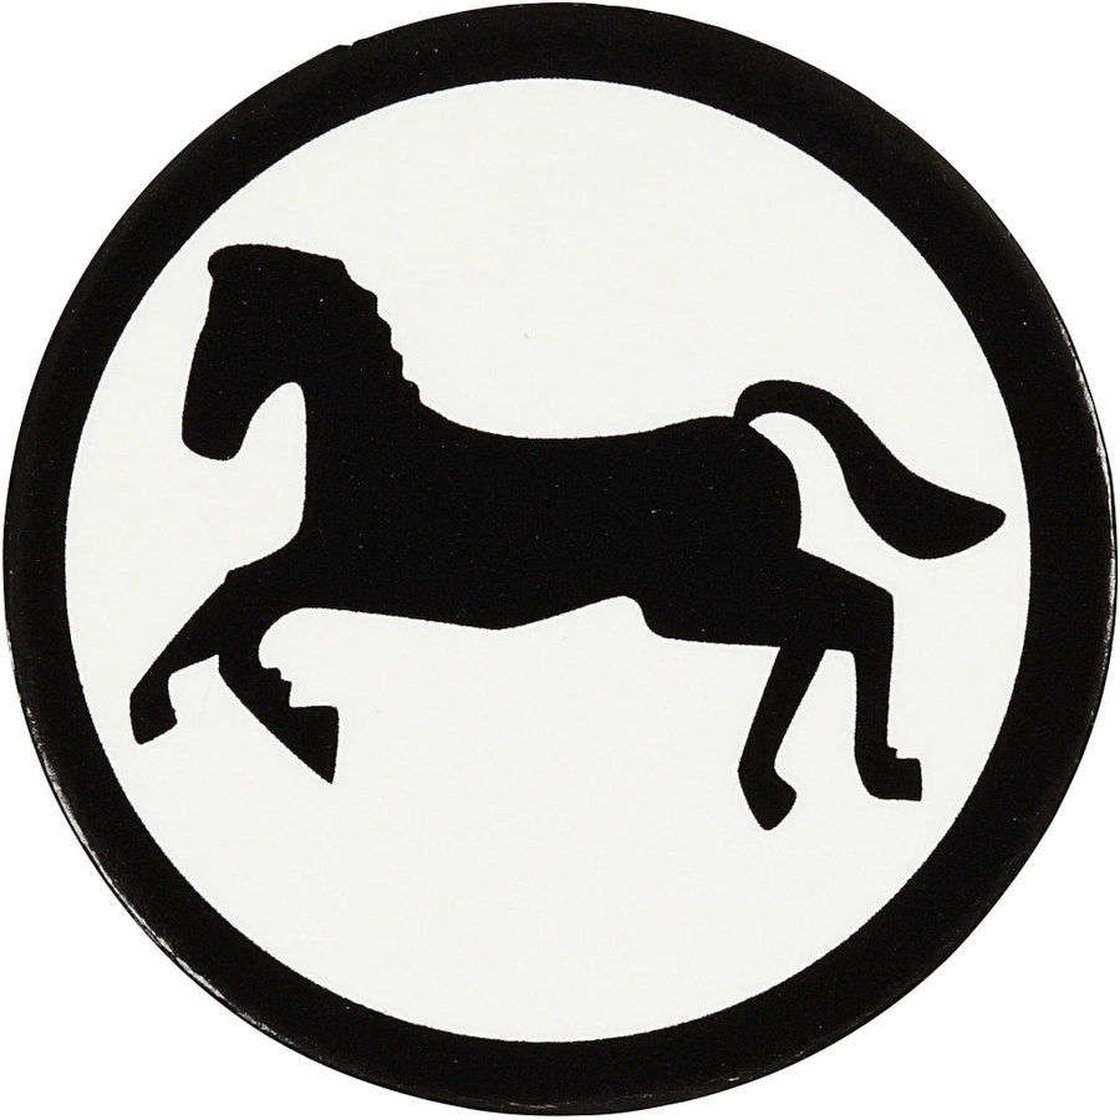 Конь какая машина. Машина с логотипом лошади. Значок лошади. Значок авто с лошадью. Логотип с лошадью автомобиль.